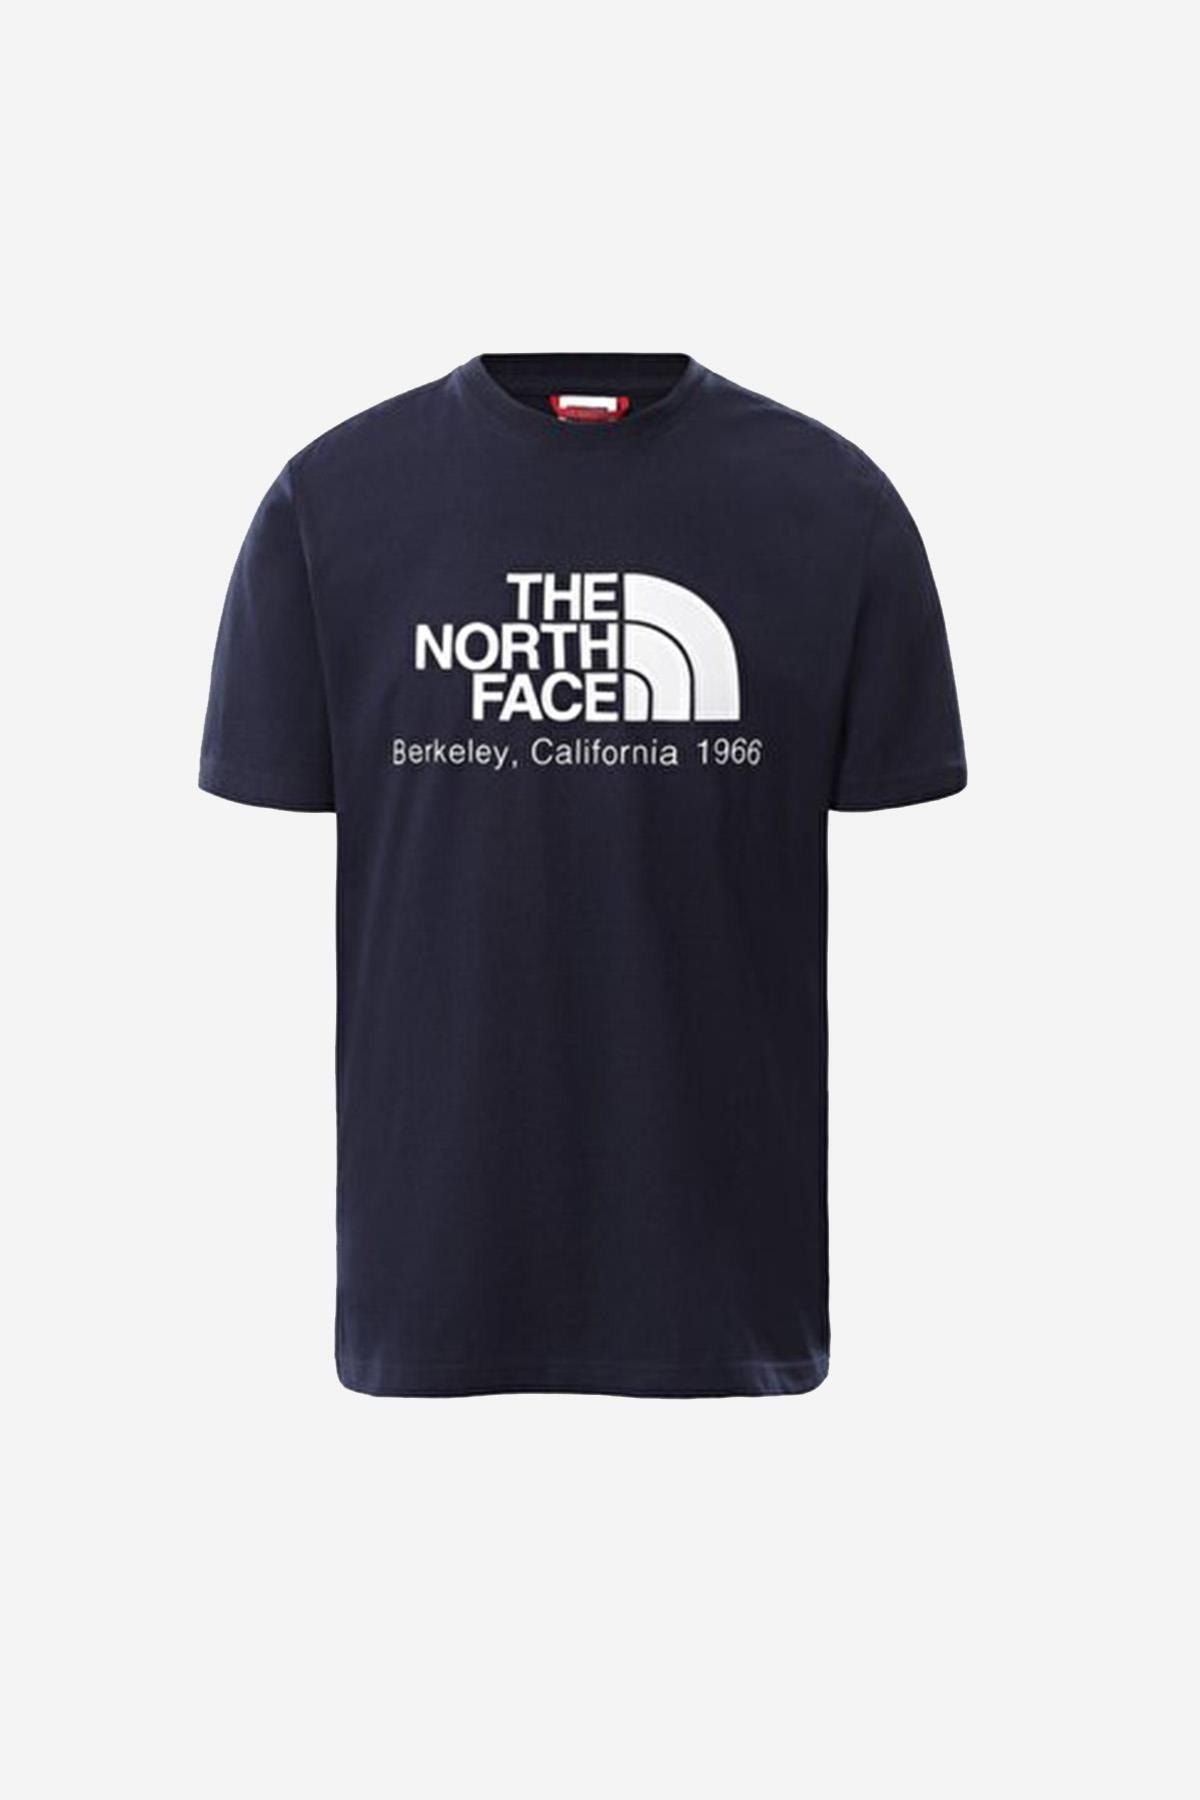 The North Face M Berkeley Calıfornıa Tee- In Scrap Mat T-shirt Nf0a55gerg11